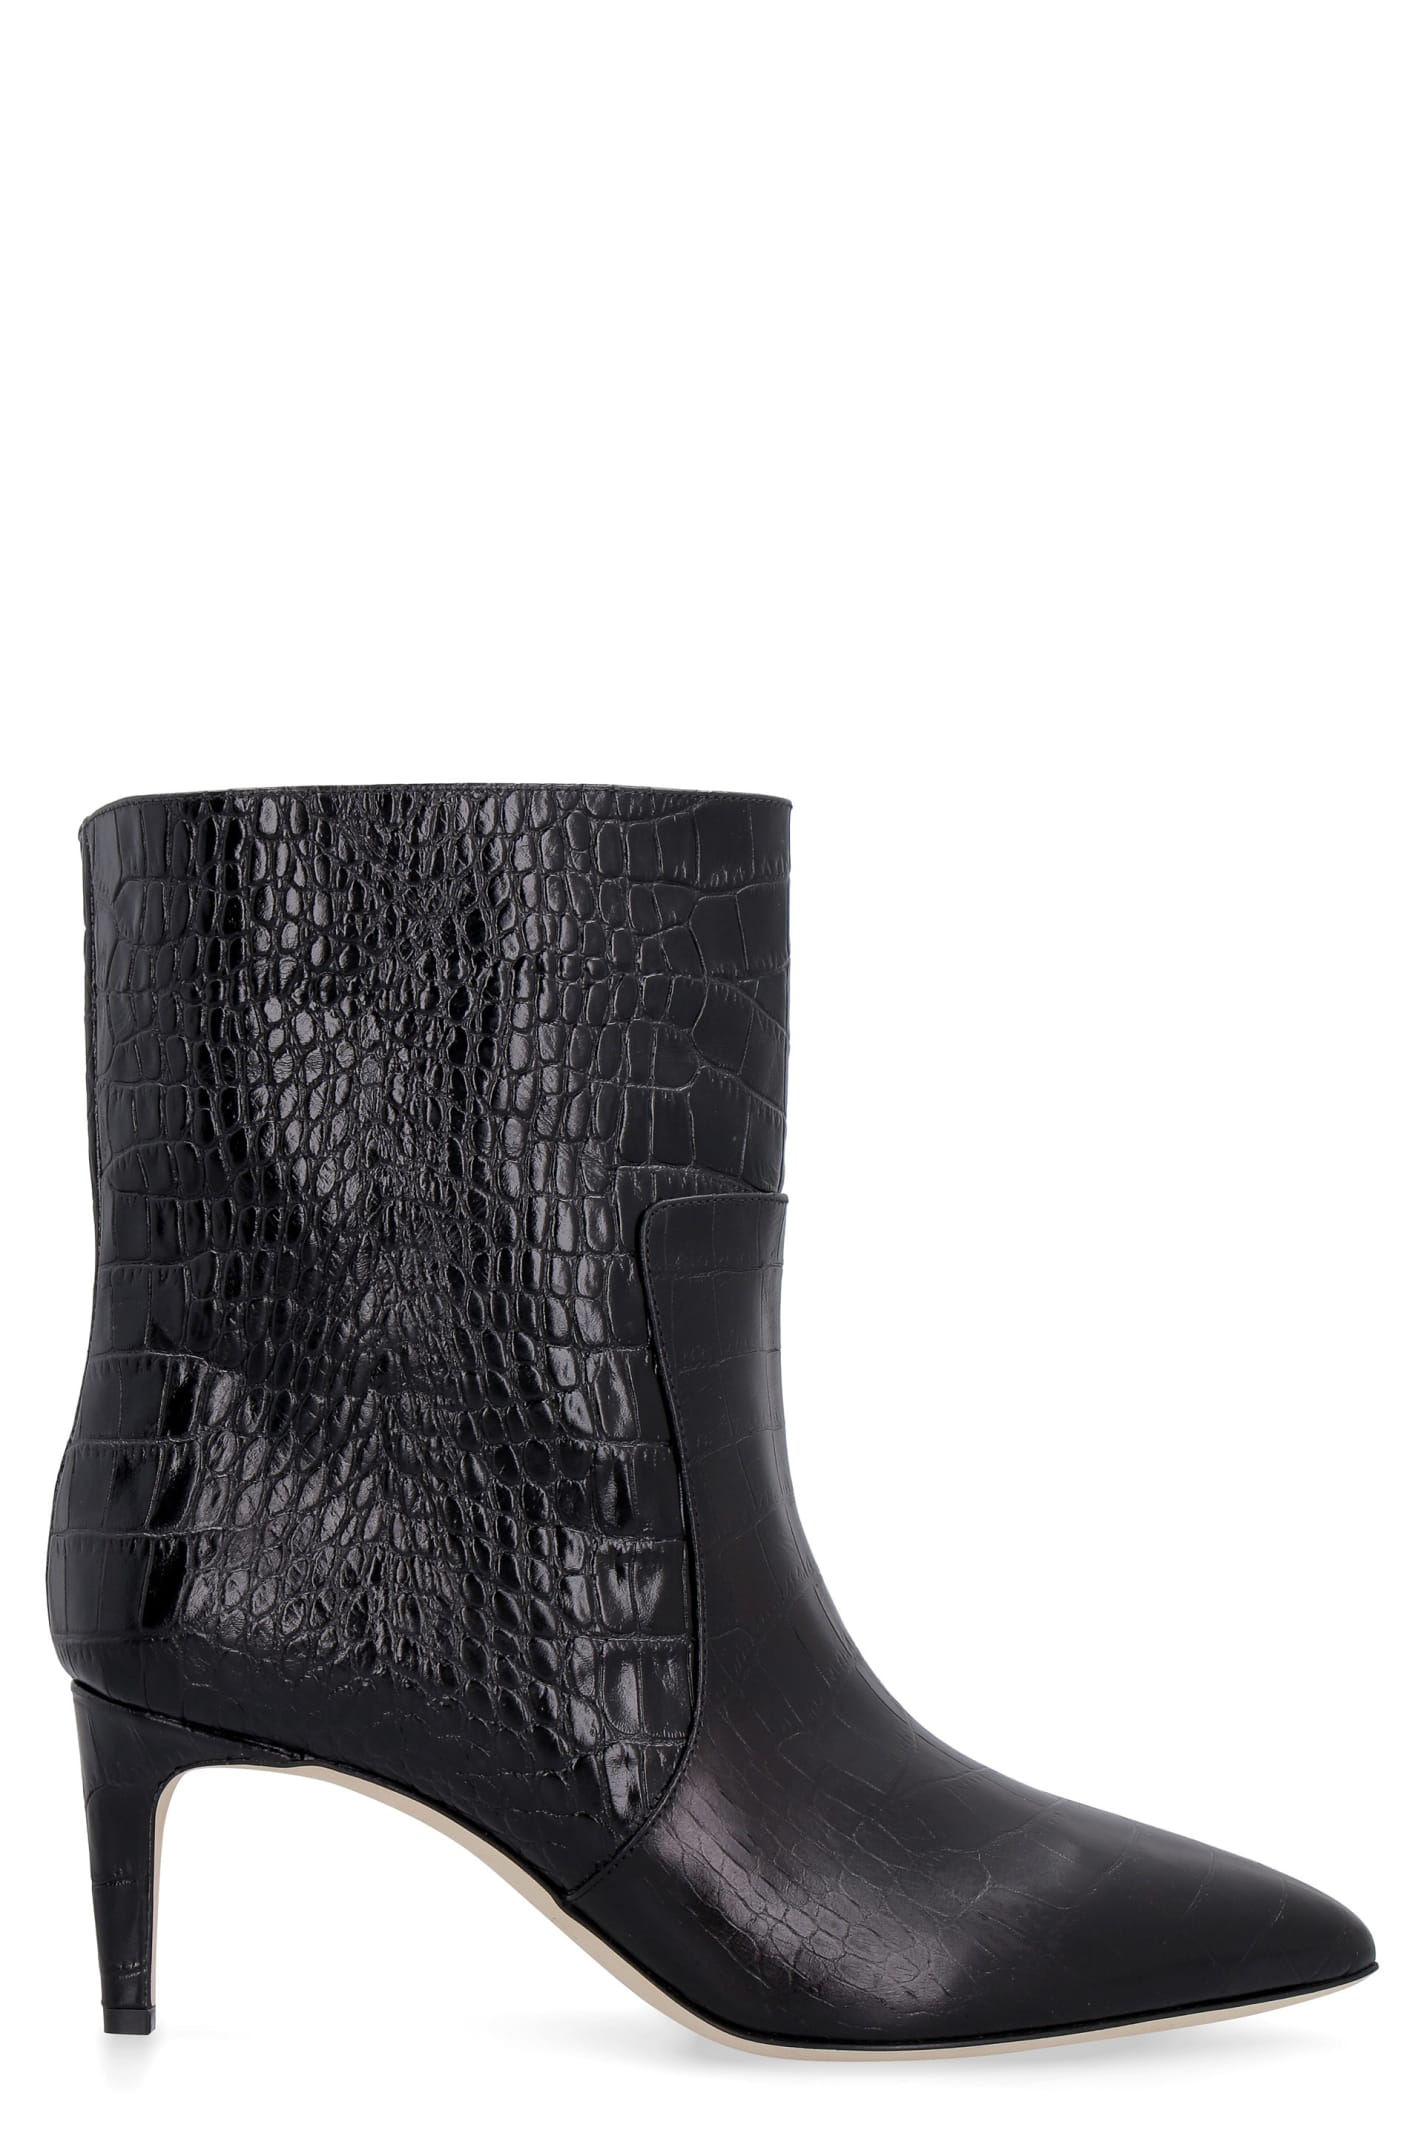 Paris Texas Croco-print Leather Ankle Boots